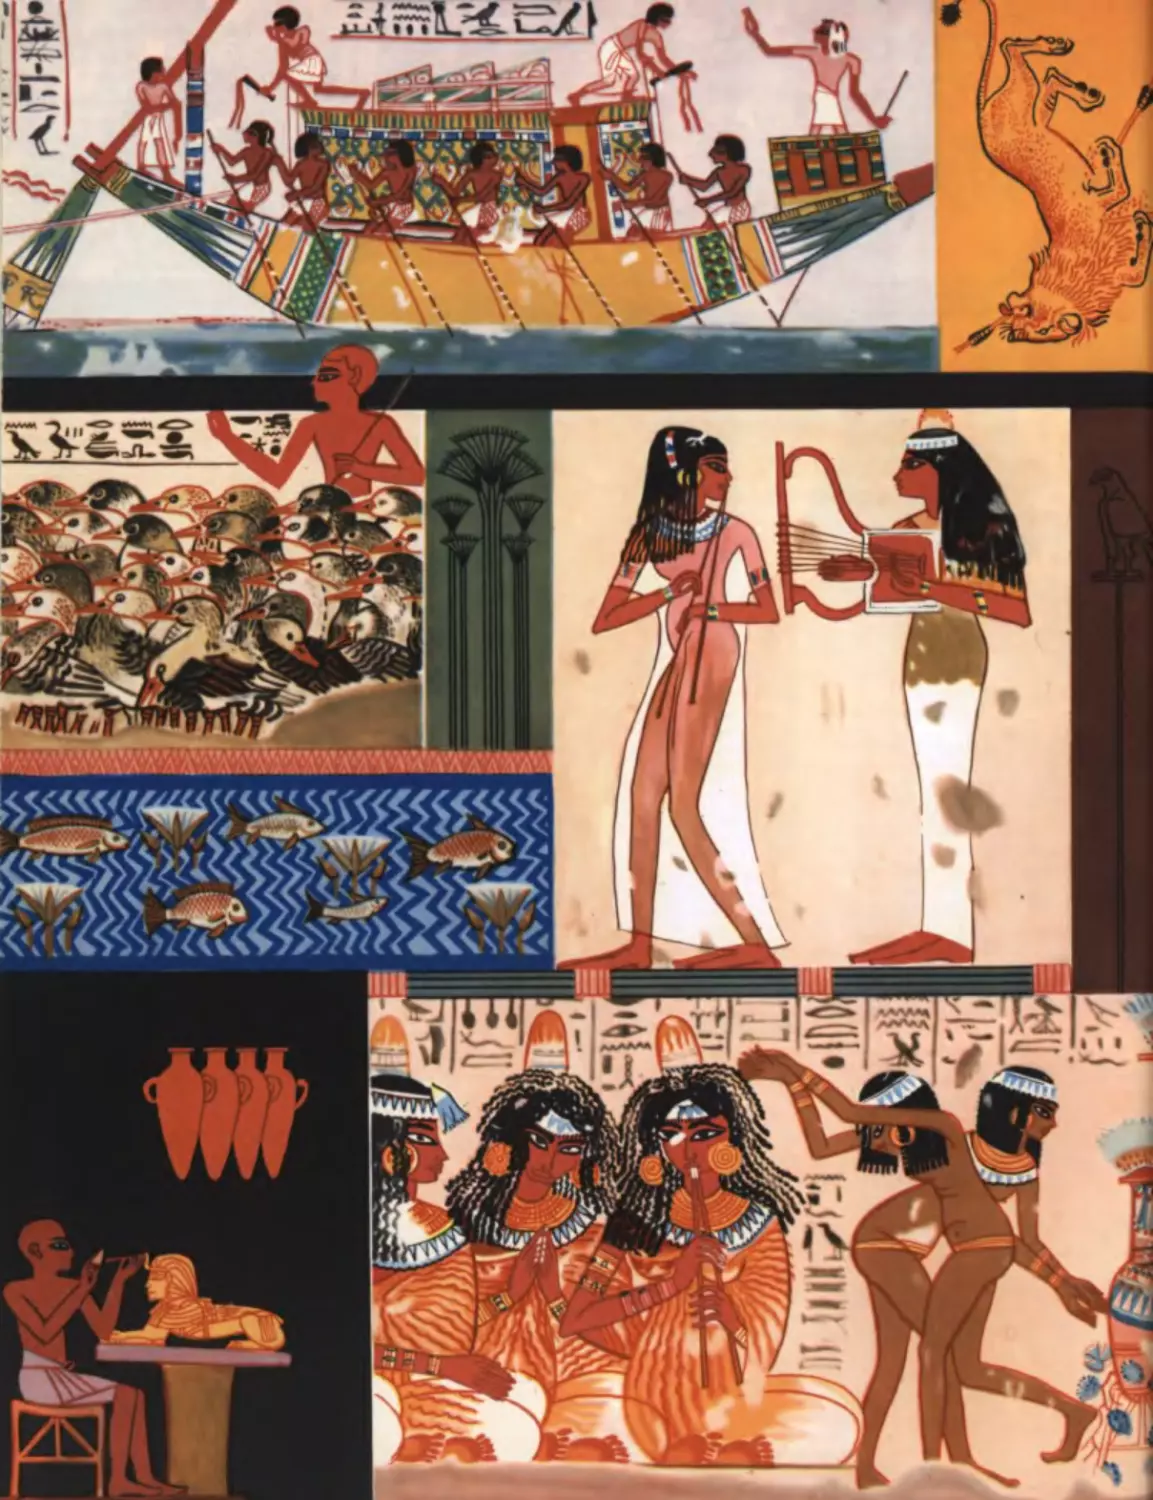 Древнеегипетский гимн  богу солнца Атону
Гробница Тутанхамона